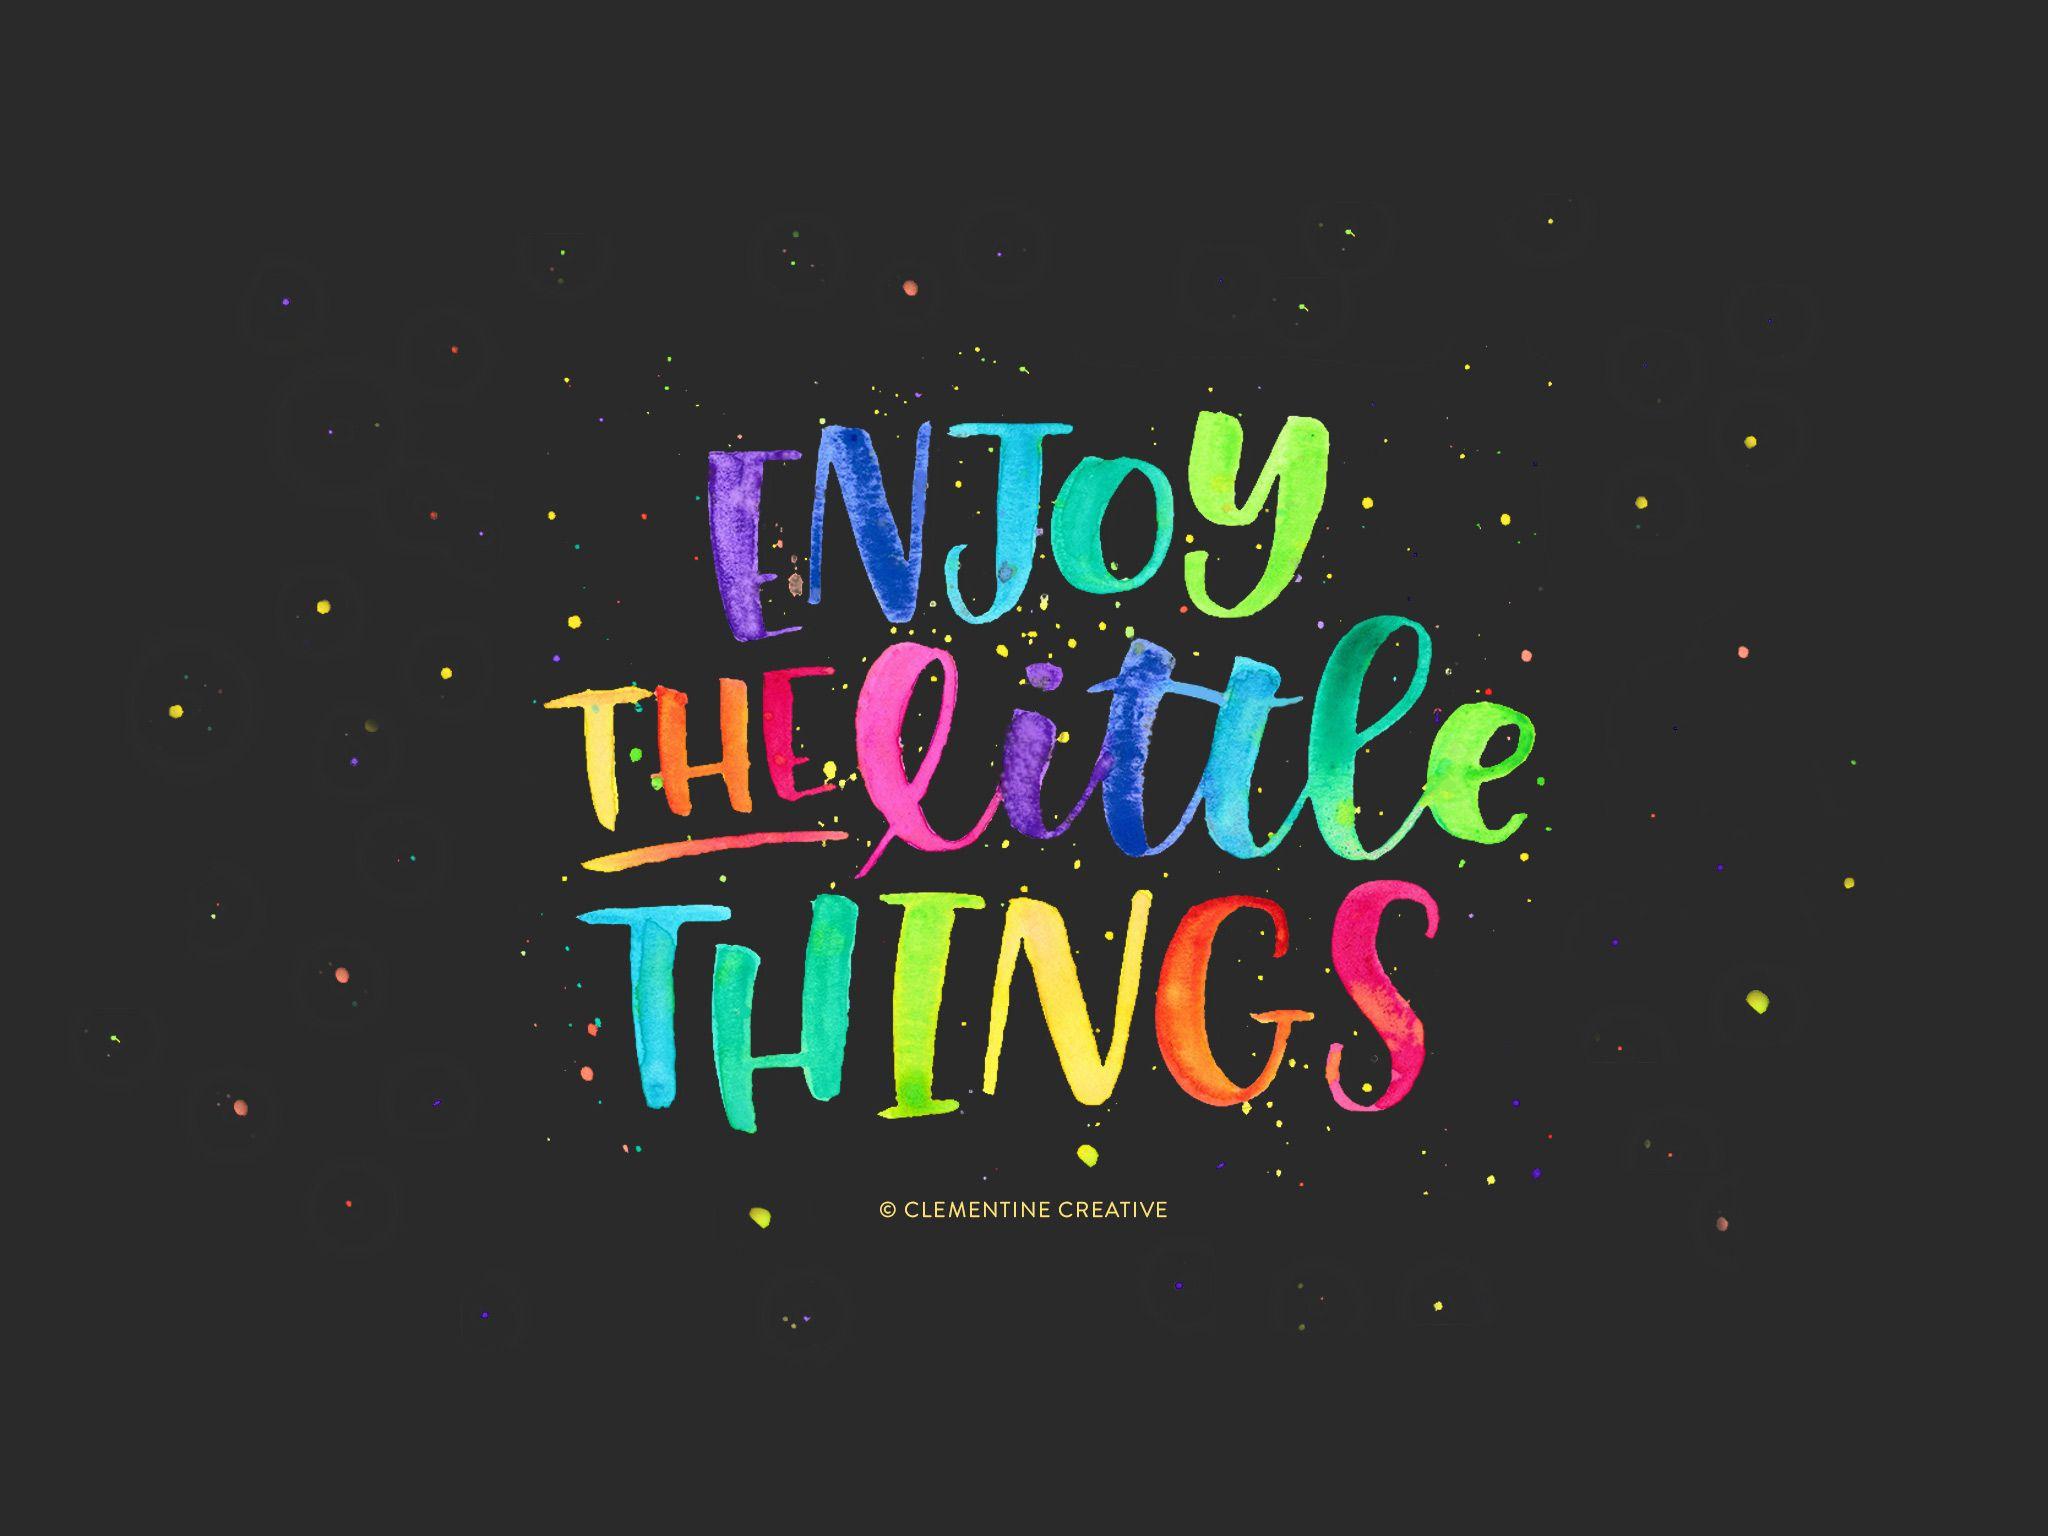 Free Wallpaper: Enjoy the Little Things